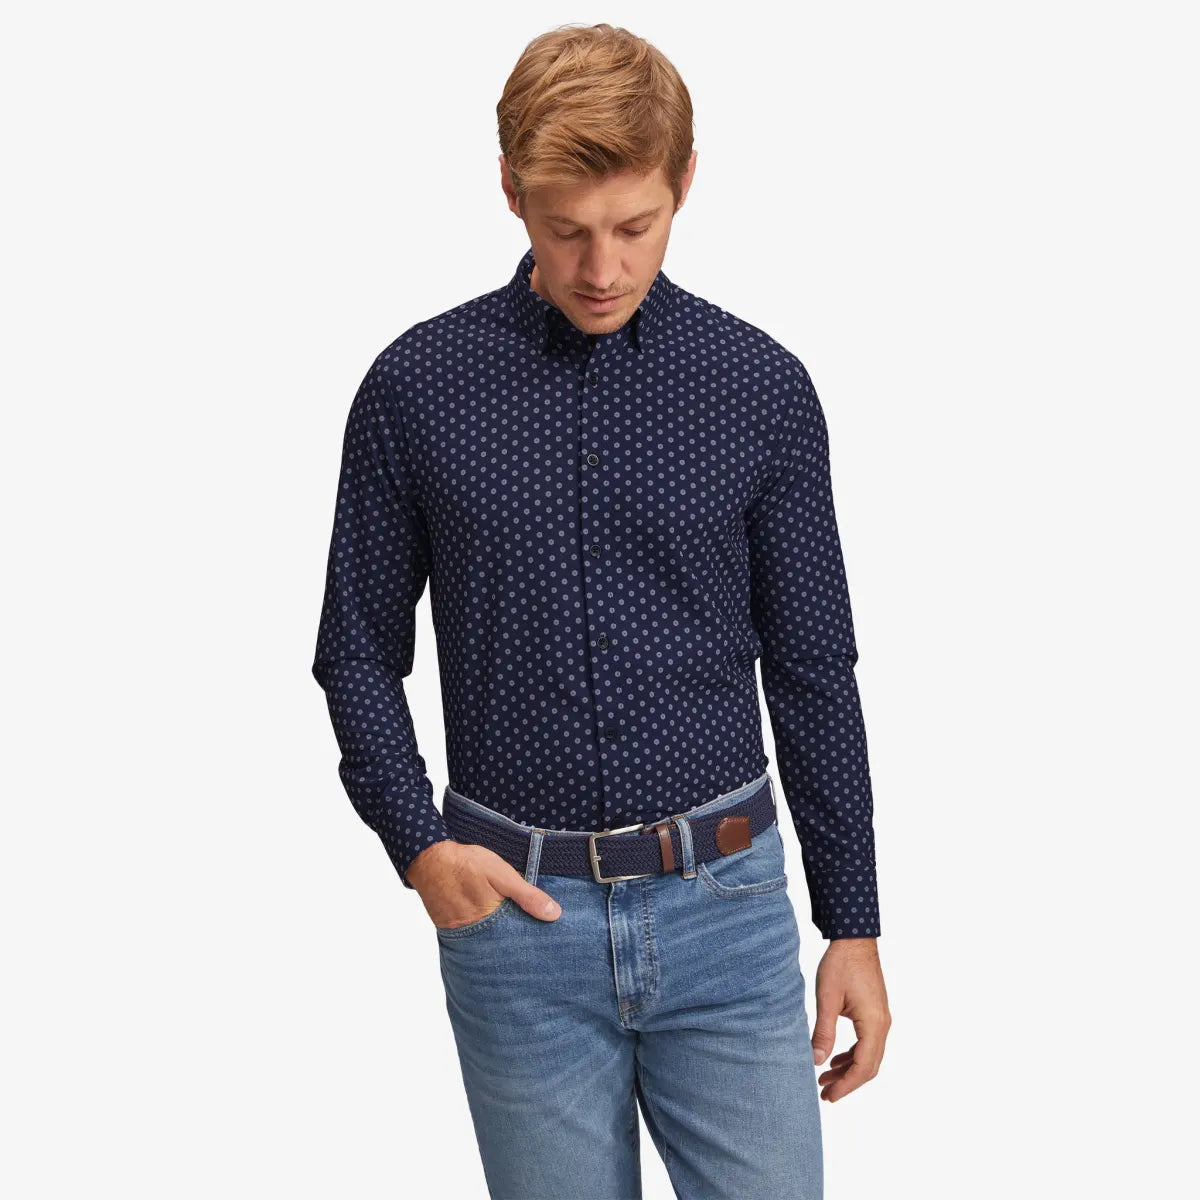 Men's Collared Dress Shirts - Mizzen+Main